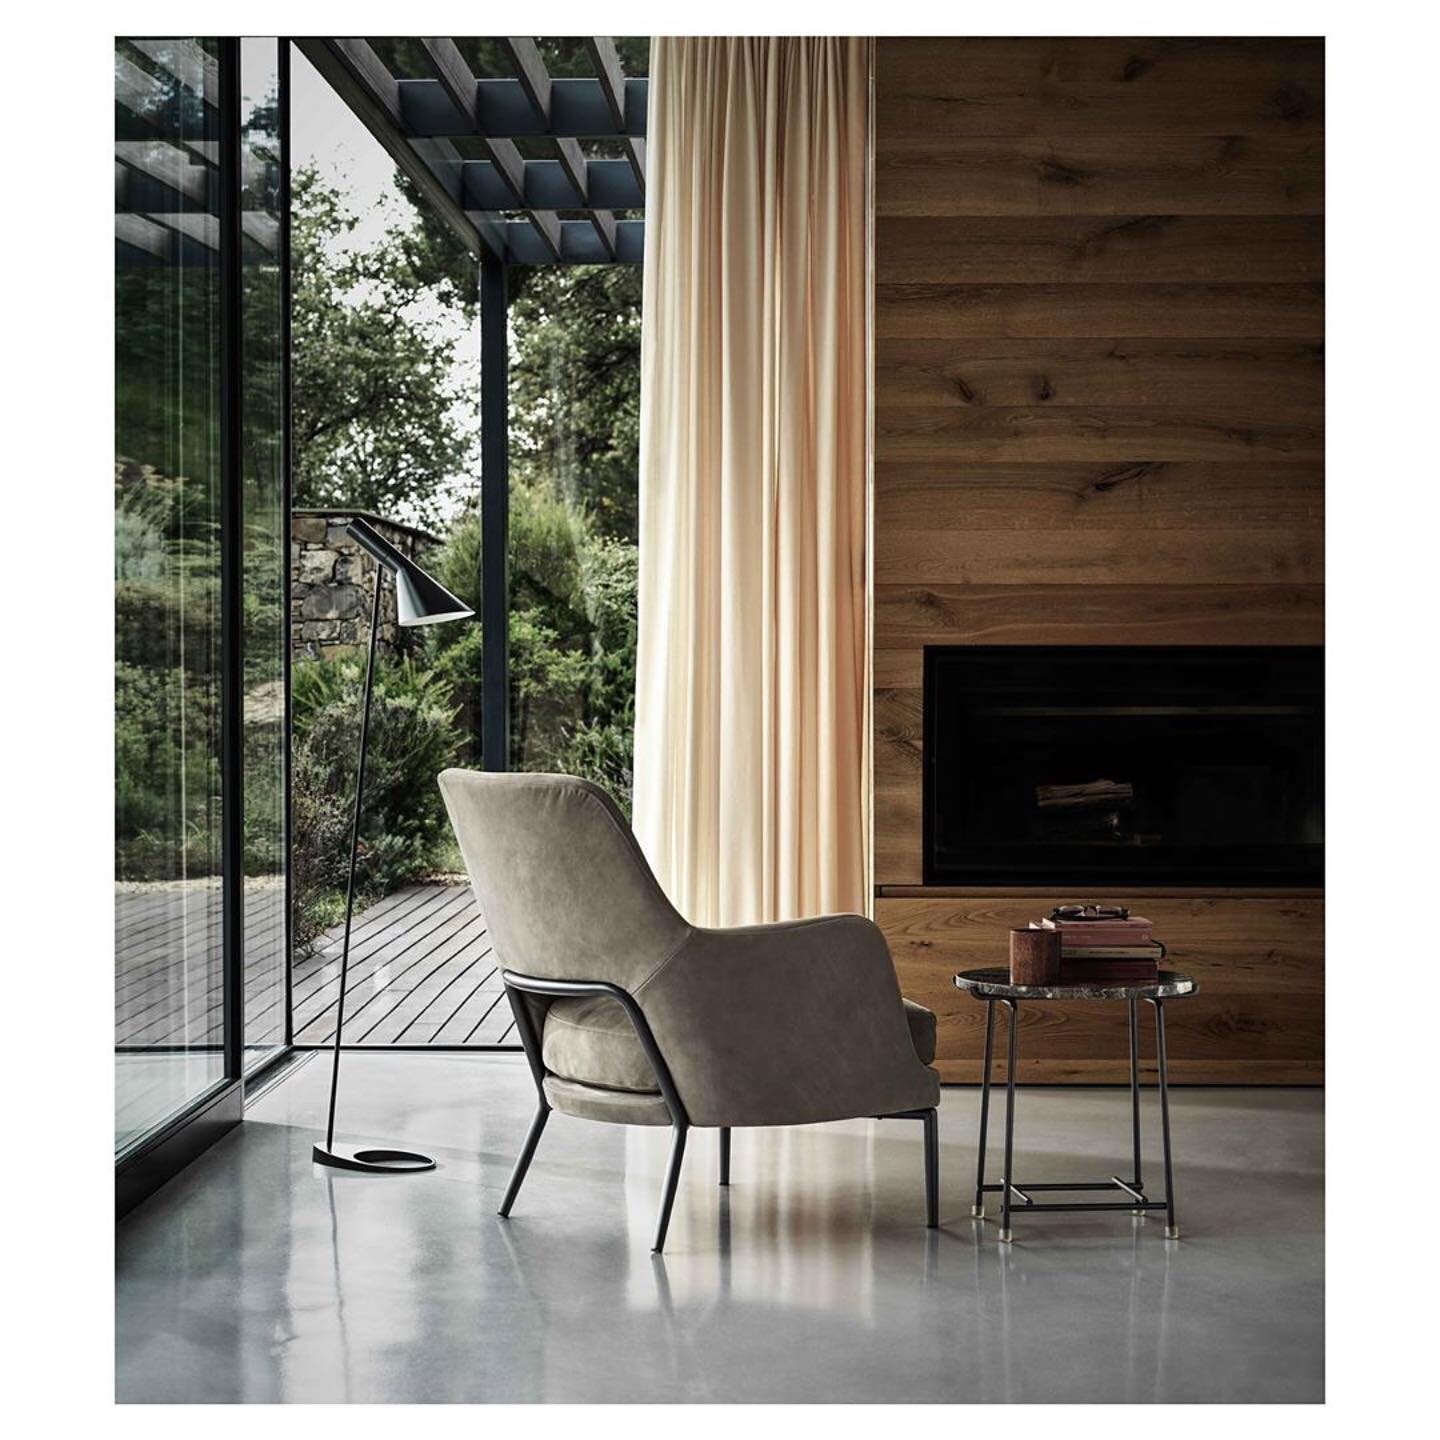 JOYCE arm chair and ANY DAY side table by @flexformspa 

#interior #flexform #interiordesign #design #style Picture credit: @flexformspa